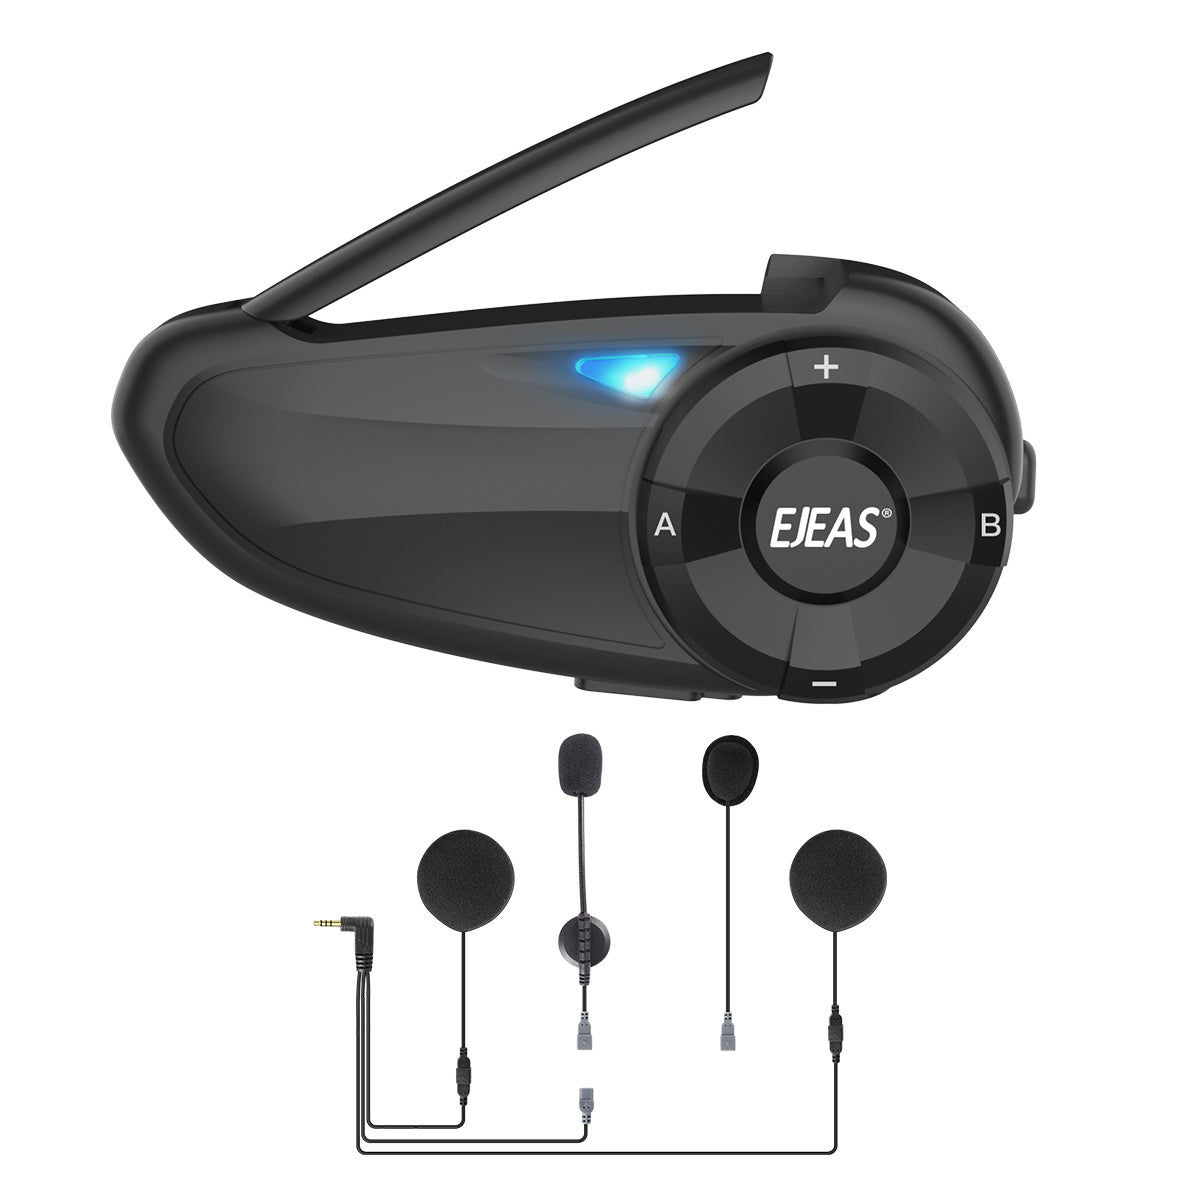 Q7 Motorcycle Helmet Bluetooth 5.0 Intercom - Waterproof, FM